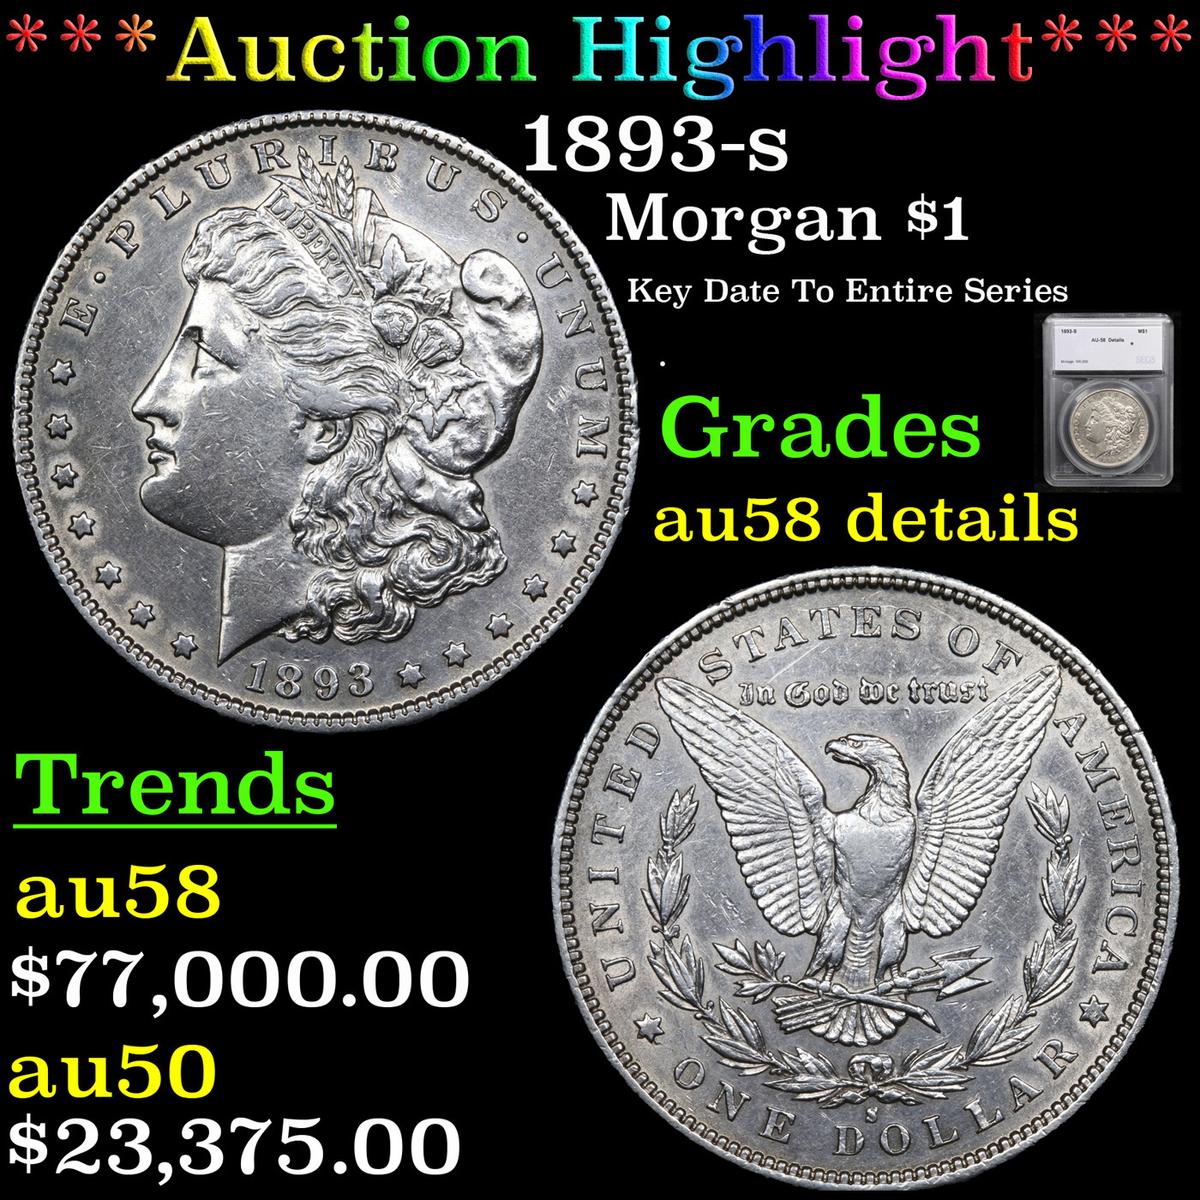 ***Auction Highlight*** 1893-s Morgan Dollar $1 Graded au58 details By SEGS (fc)